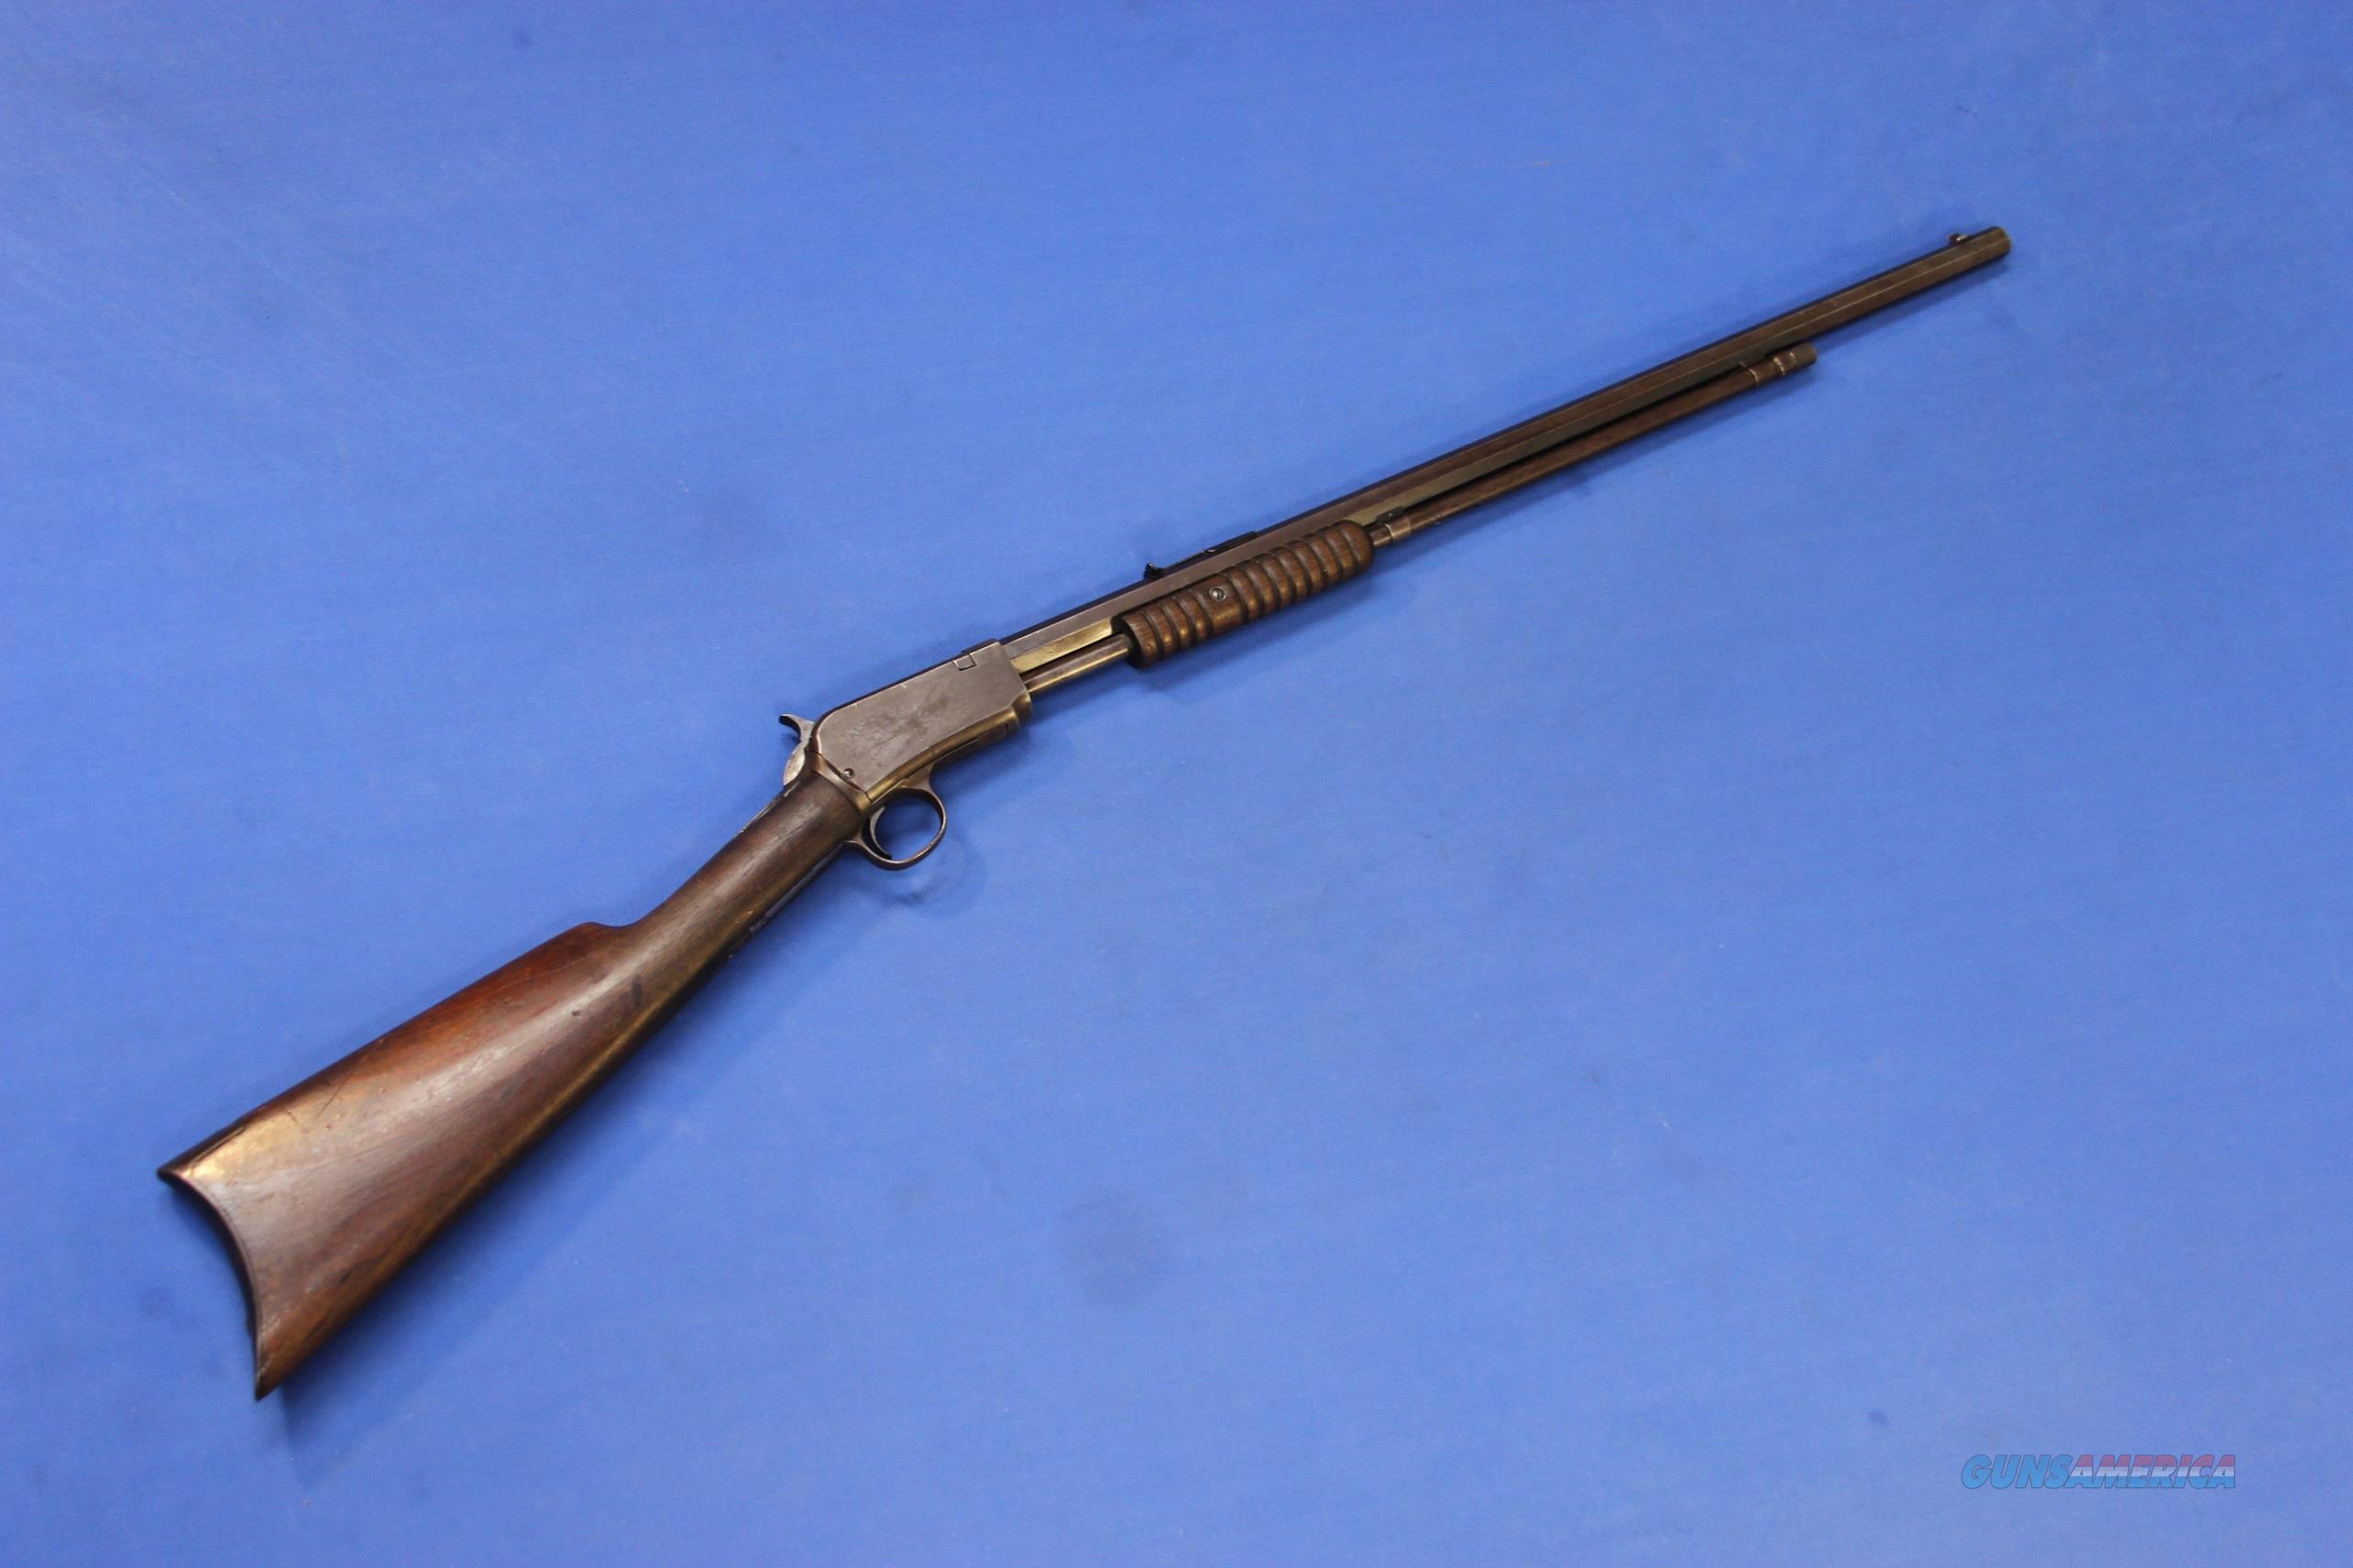 winchester model 90 22 short rifle